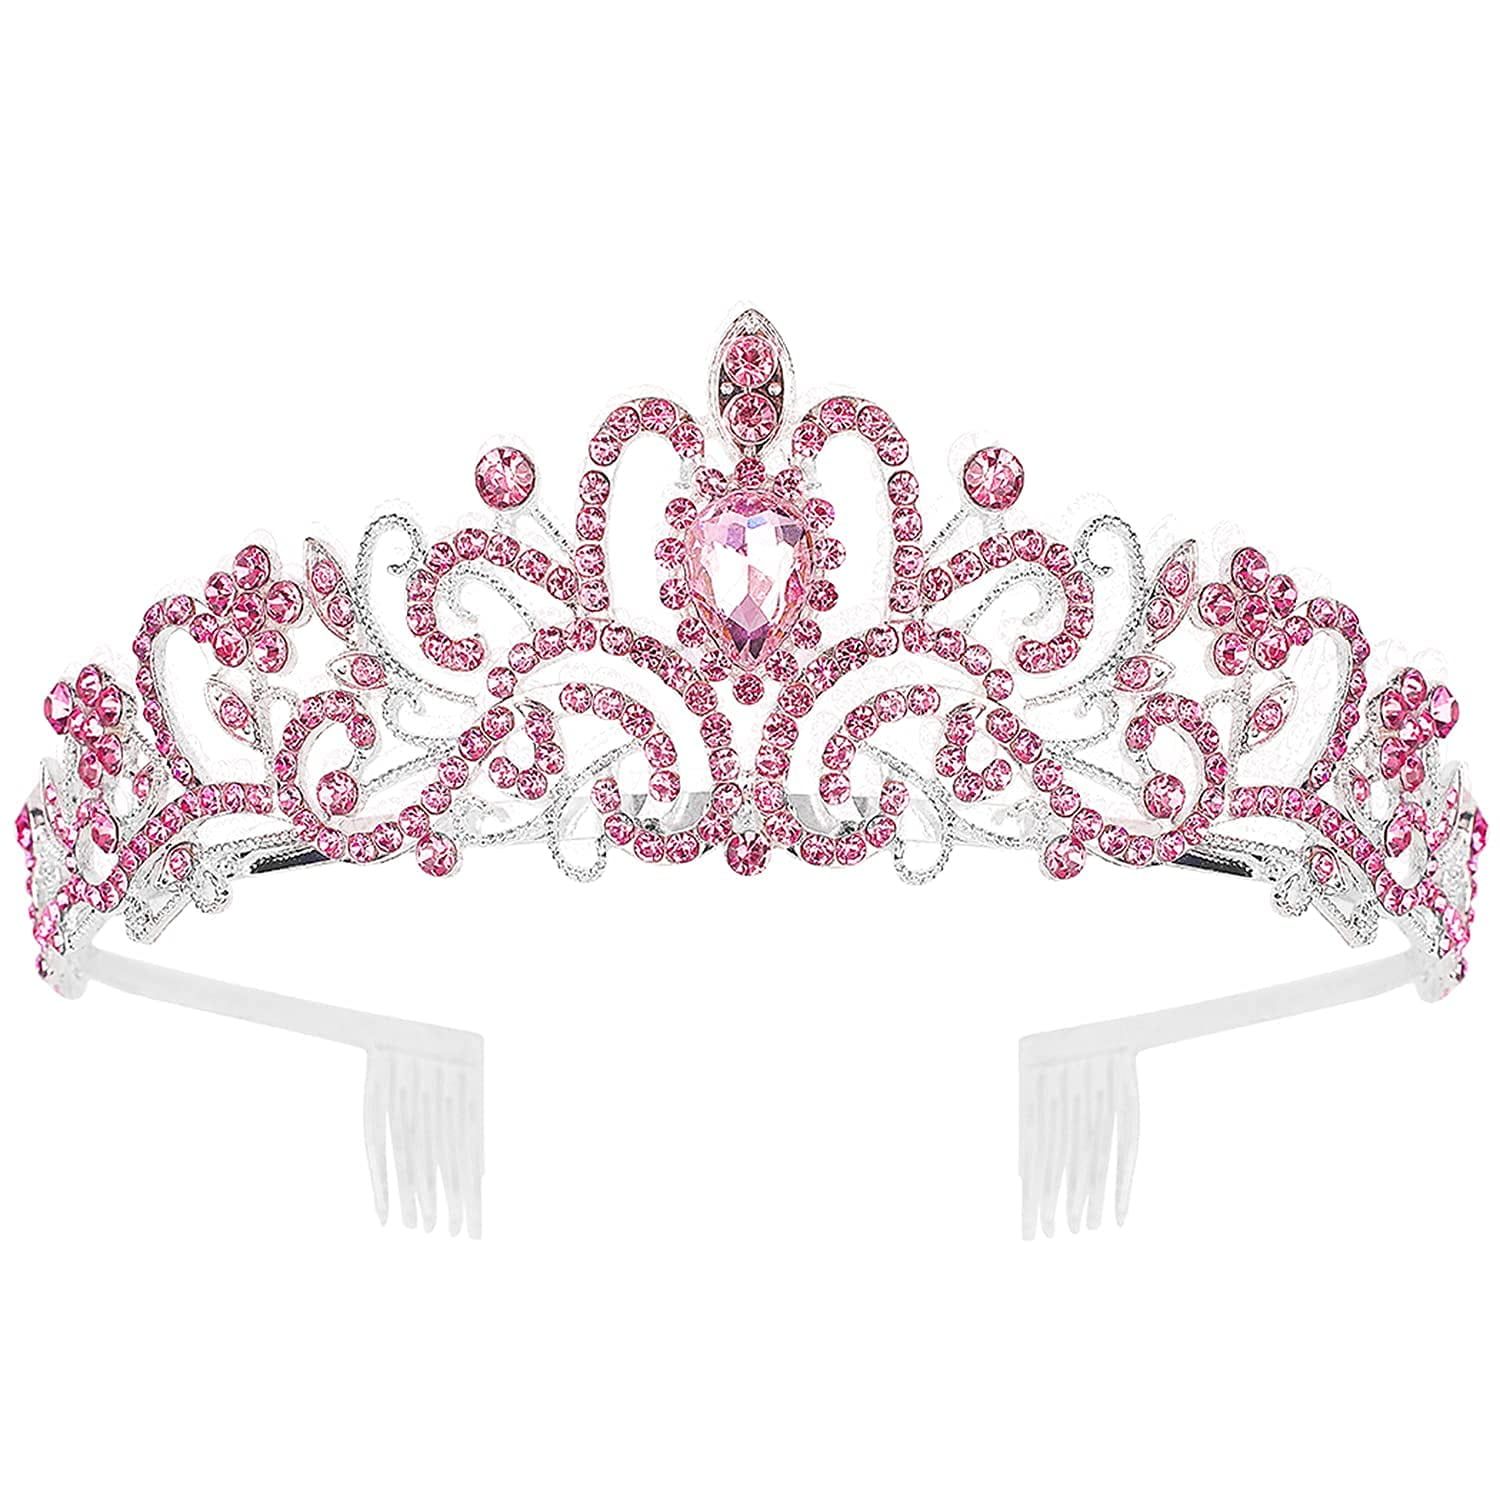 Bridal Princess Crystal Tiara Wedding Crown Veil Hair Accessory Silver+Two Combs